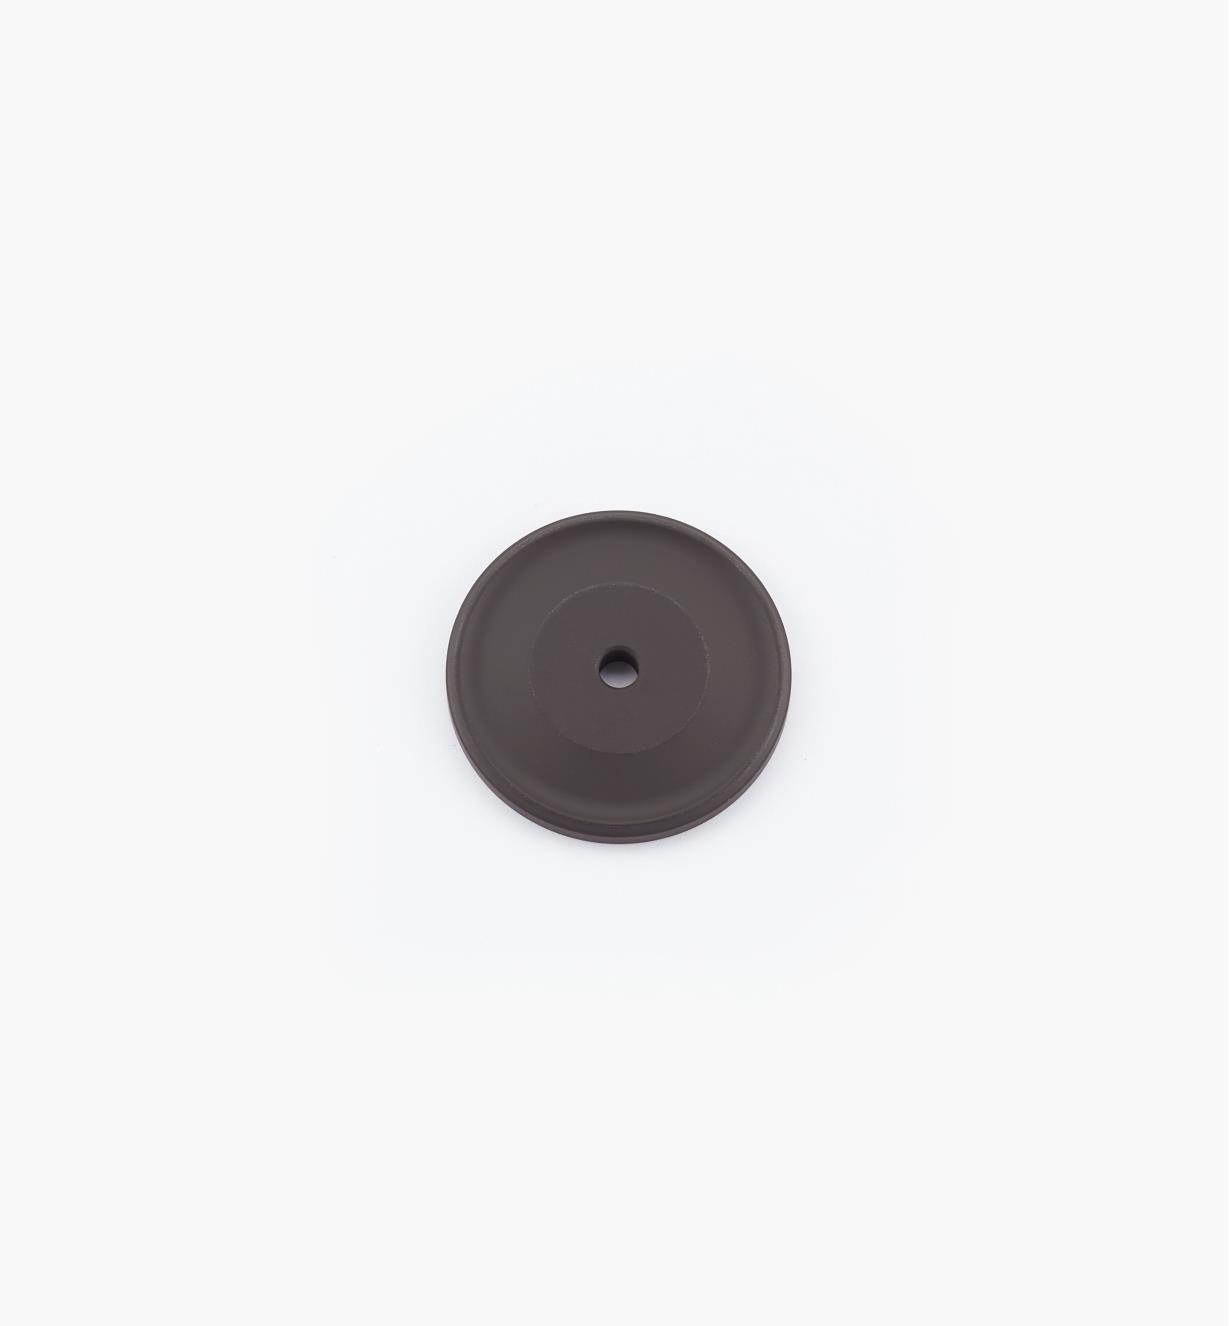 02W1804 - Rosace de bouton de 1 1/2 po, série Yukon, bronze huilé